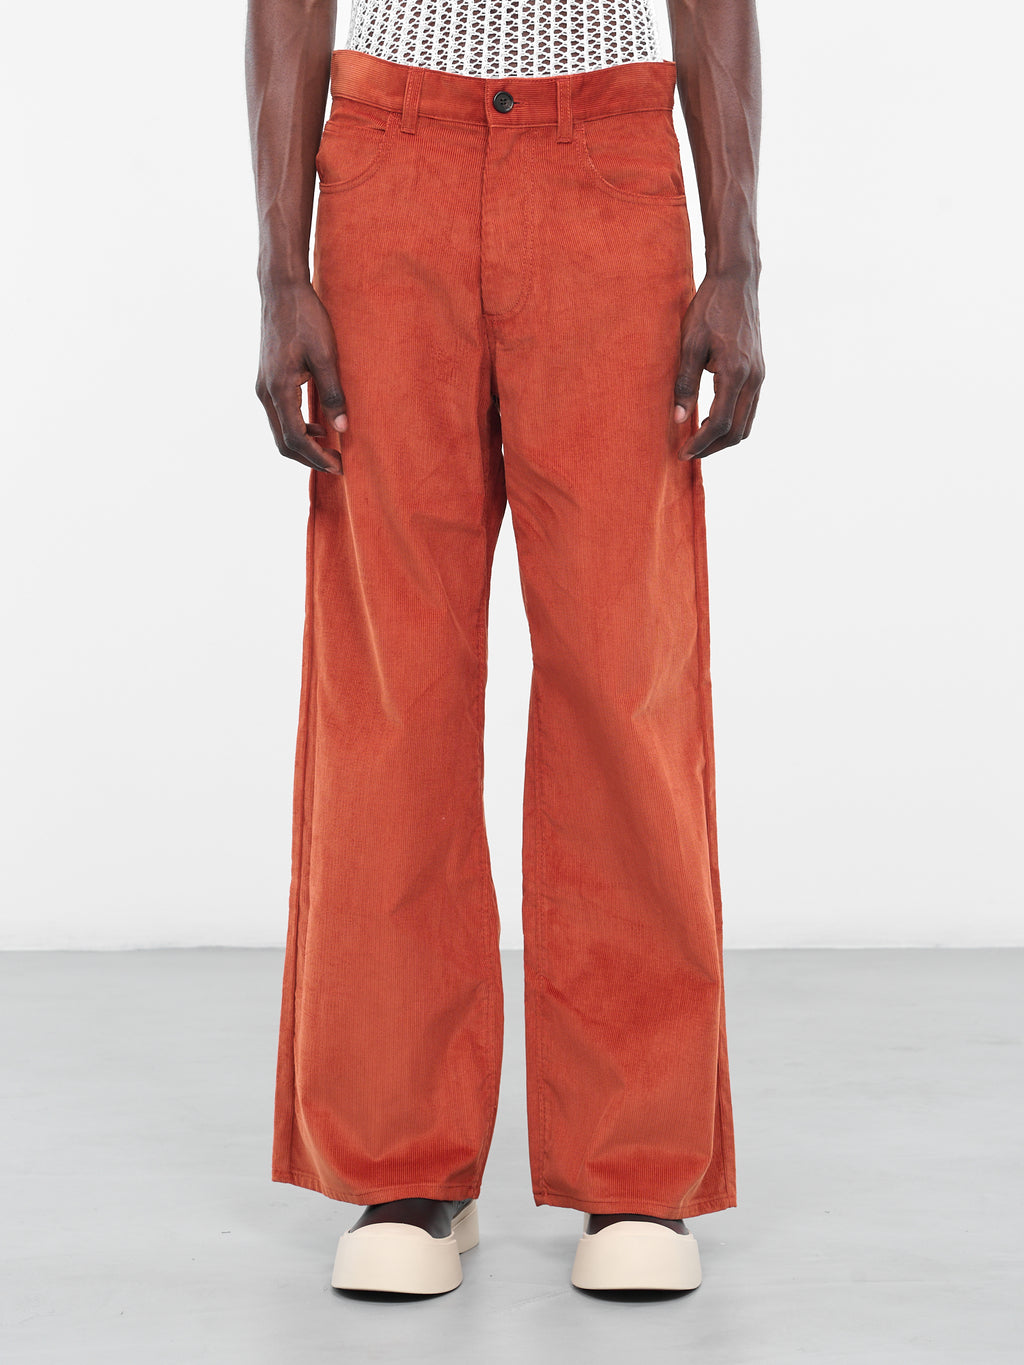 Orange Corduroy Pants - kimbermoose